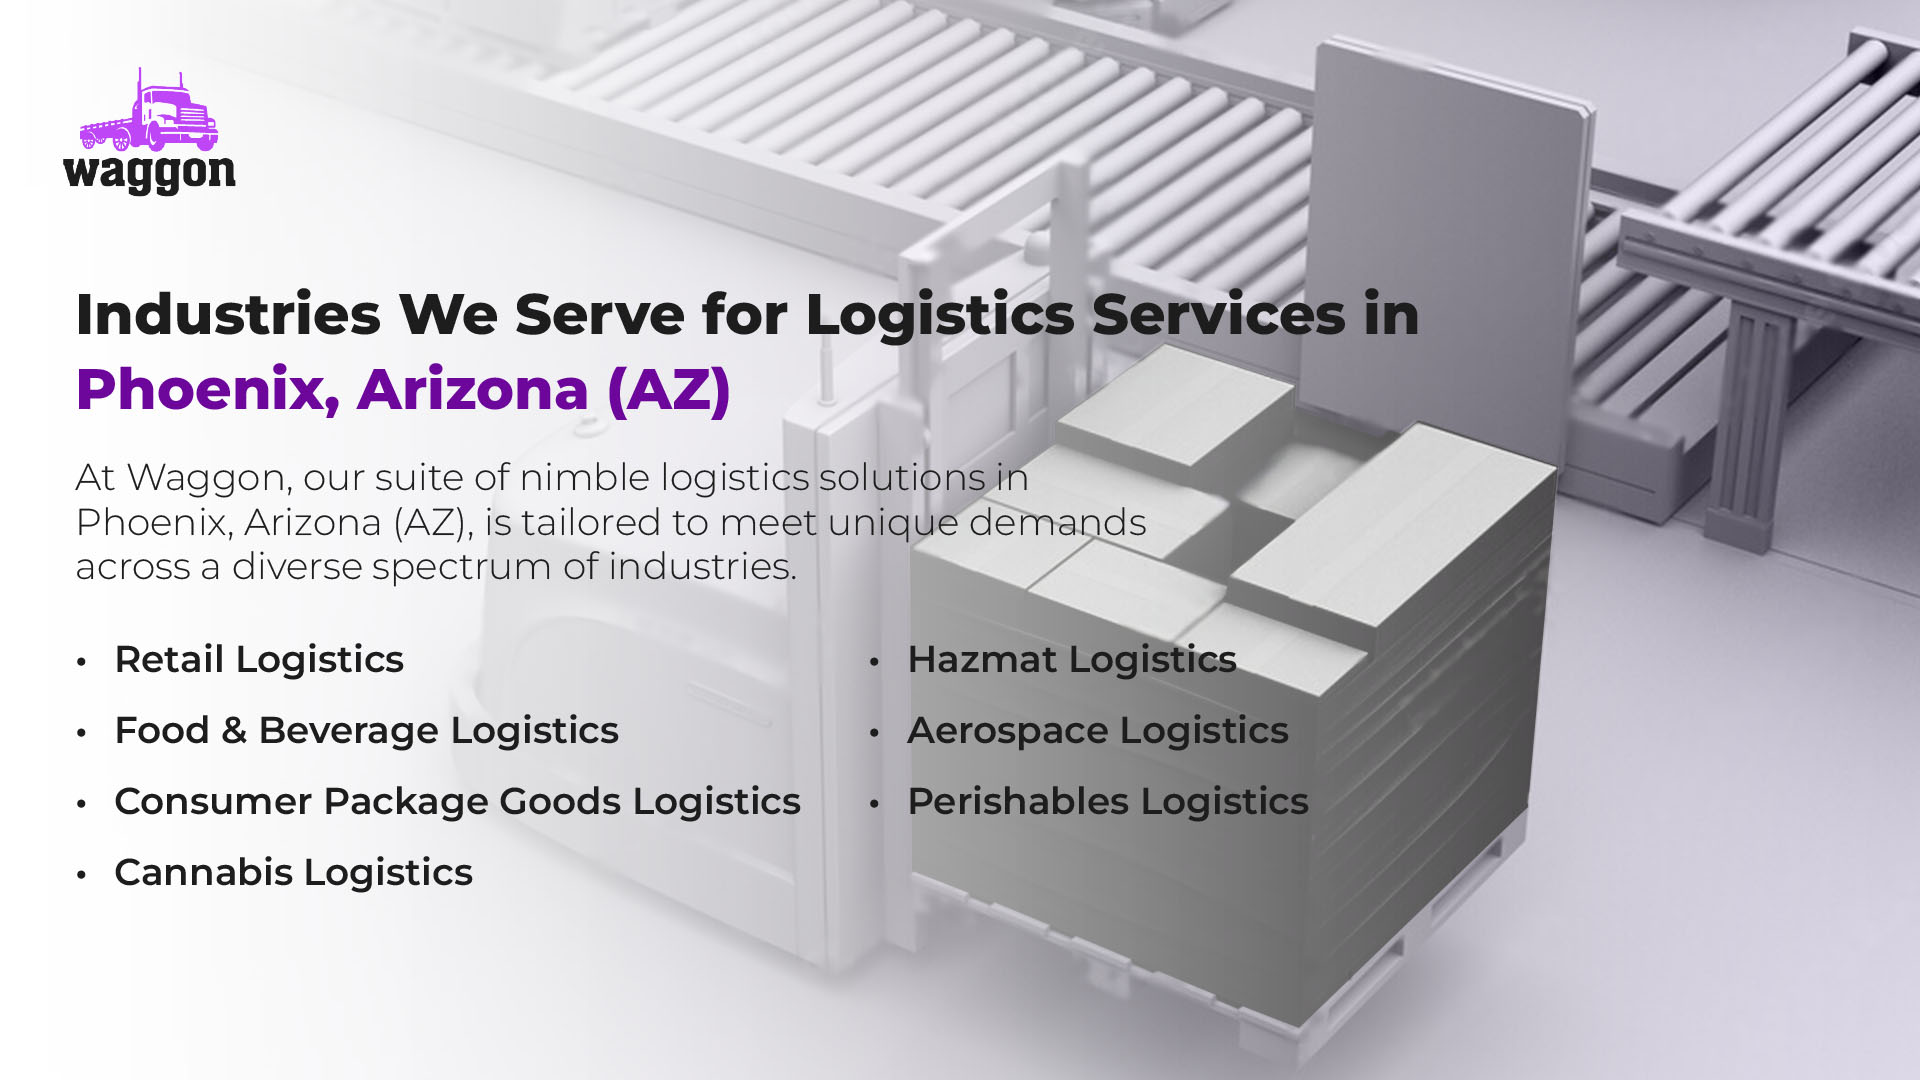 Industries We Serve for Logistics Services in Phoenix, Arizona (AZ)